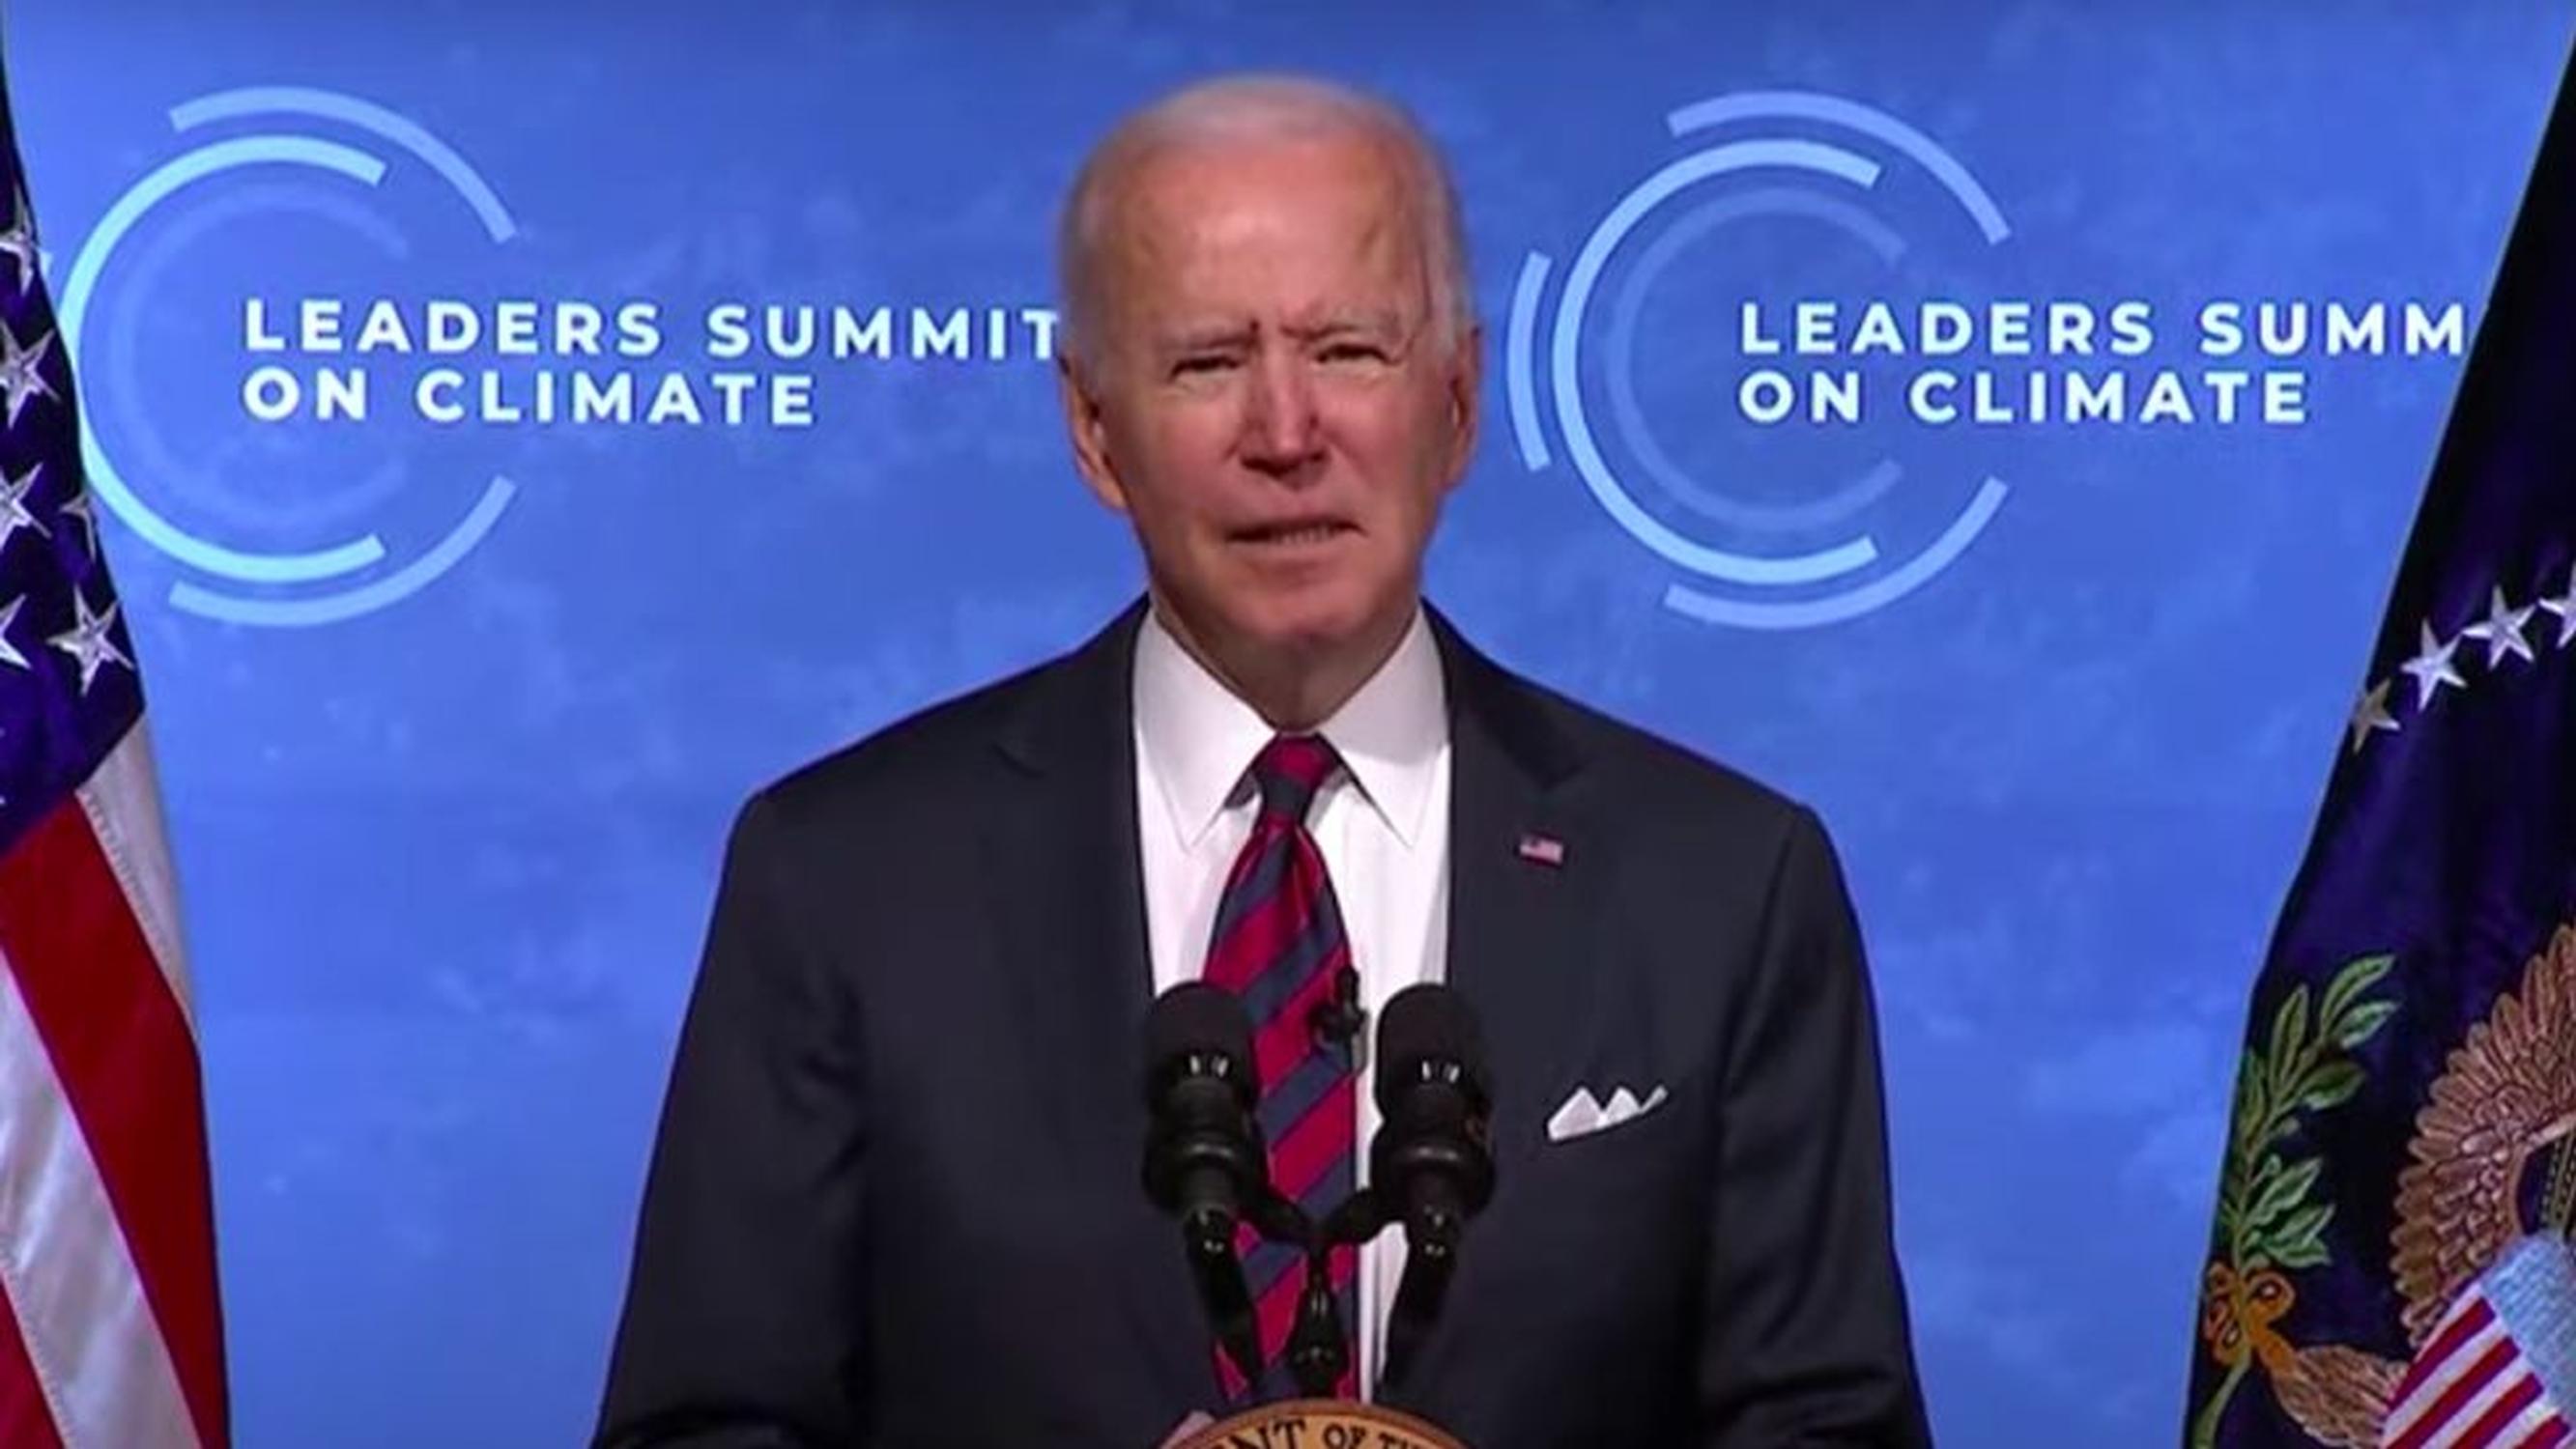 President Biden addresses the Leaders Summit on Climate